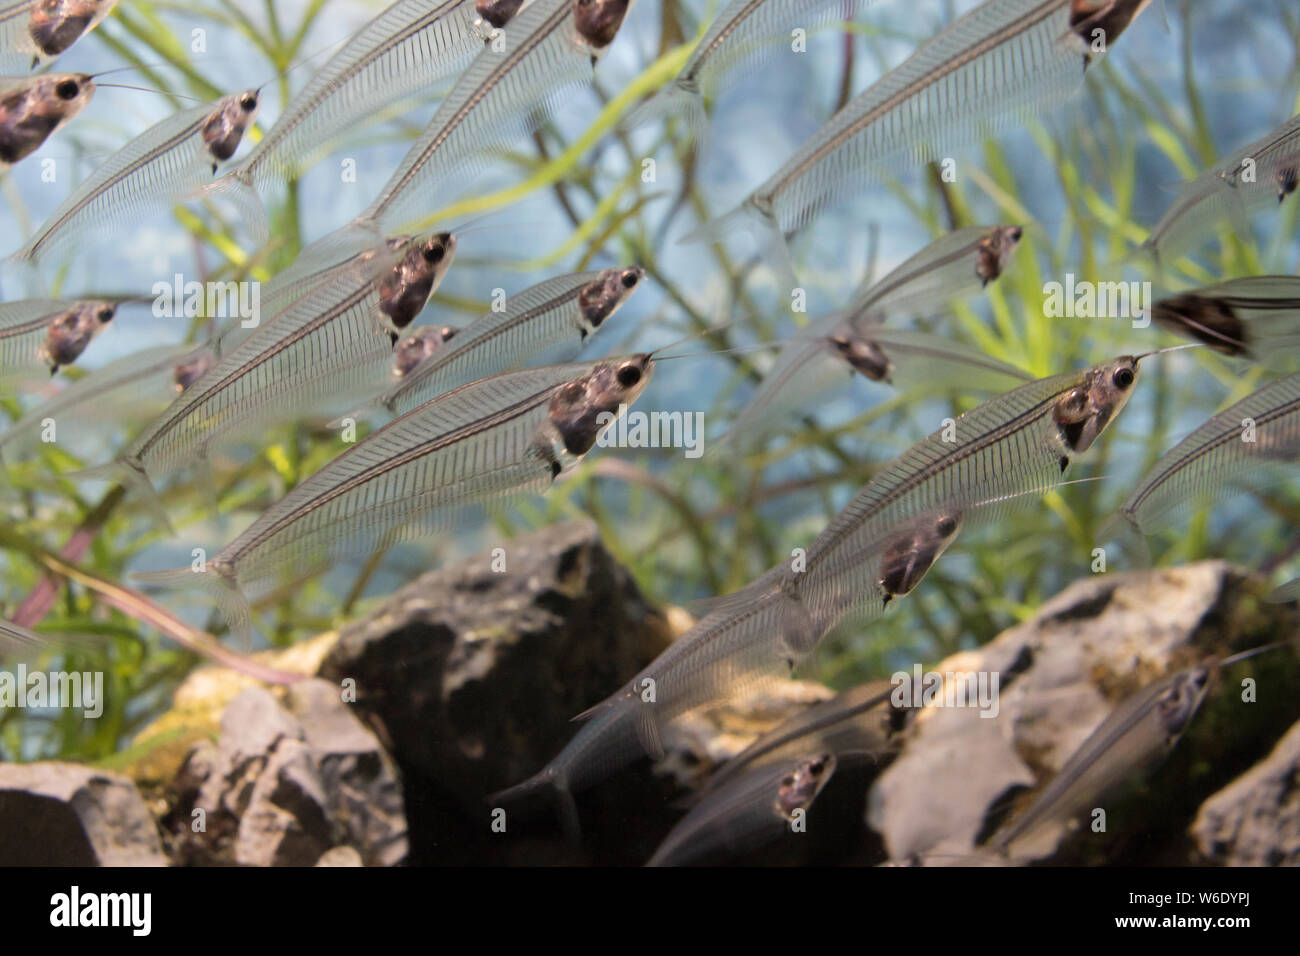 A school of glass catfish (Kryptopterus bicirrhis) swimming in an aquarium.  Nature concept Stock Photo